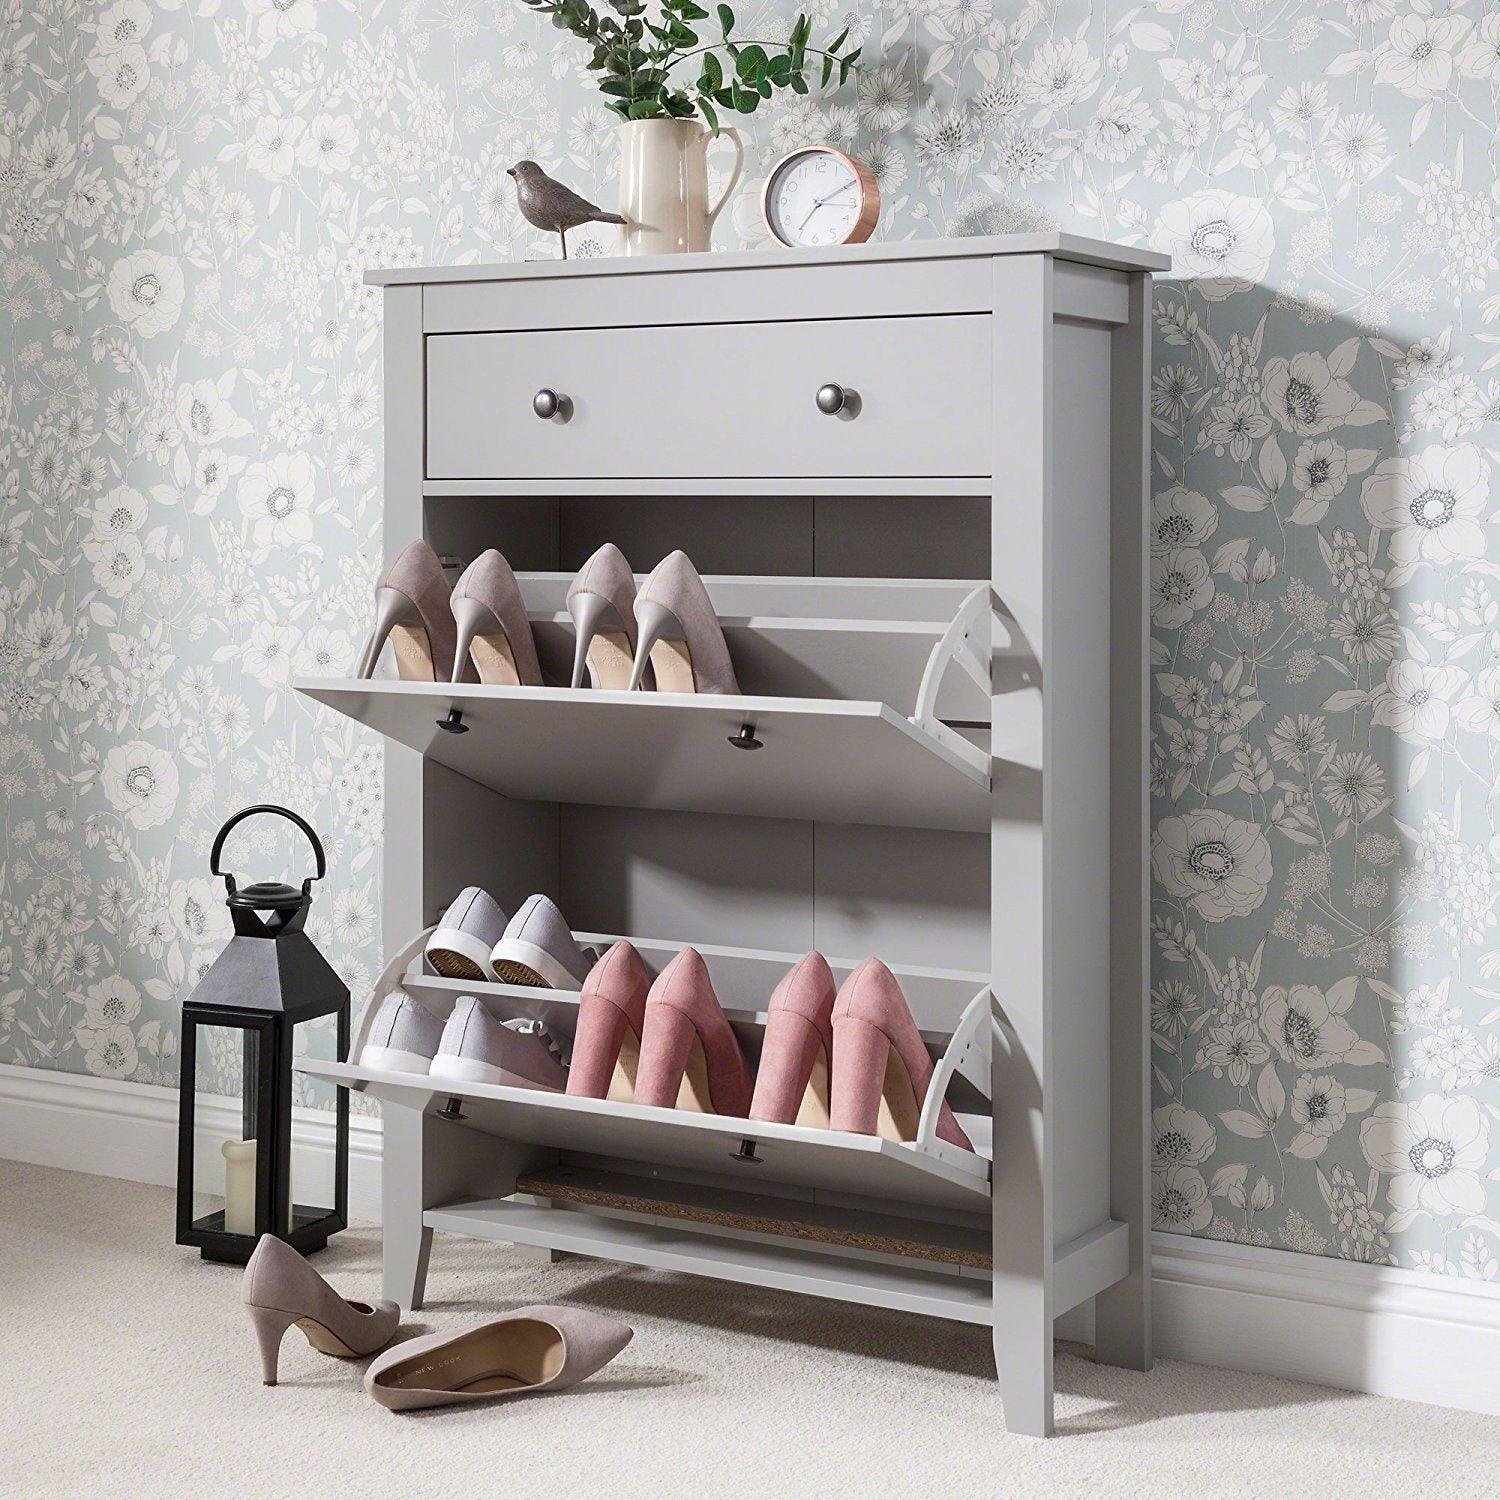 Shoe Cabinet Wooden Storage Cupboard -Laura James